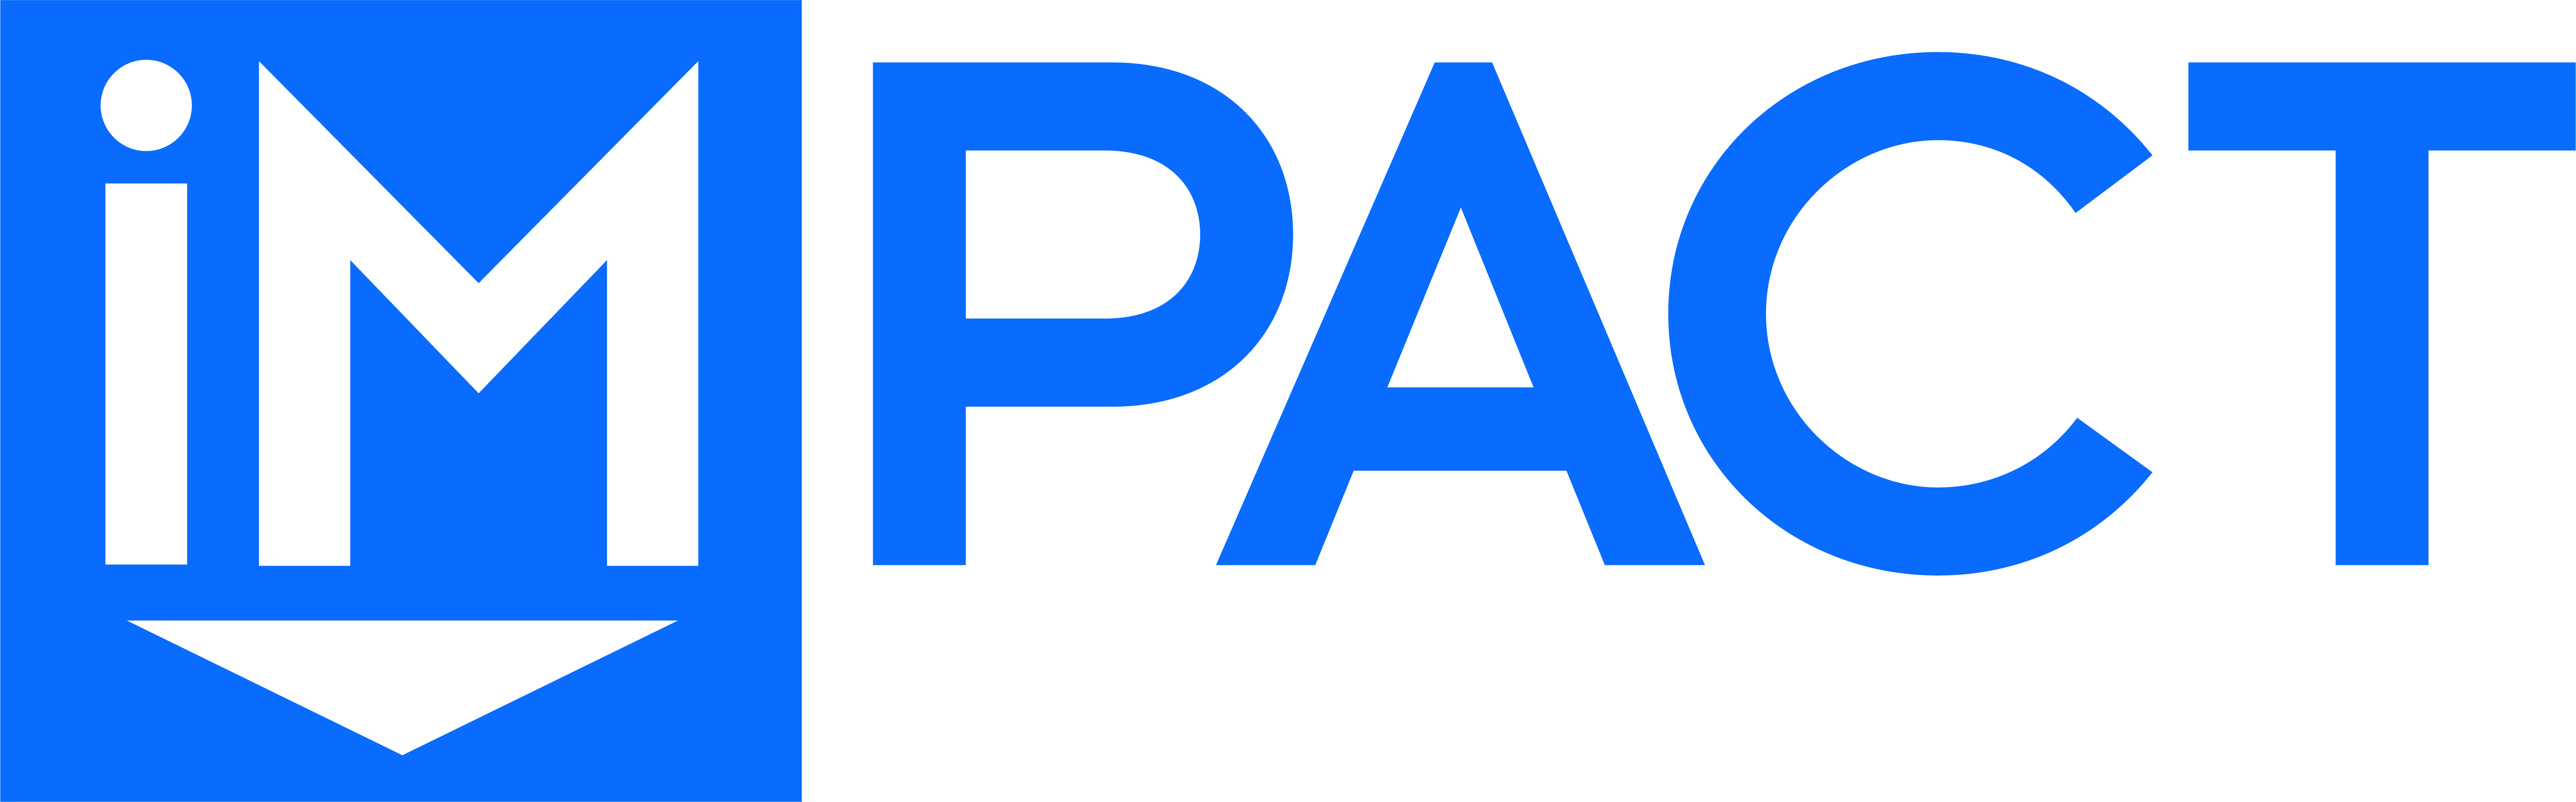 IMPACT-Logo--Blue-Full